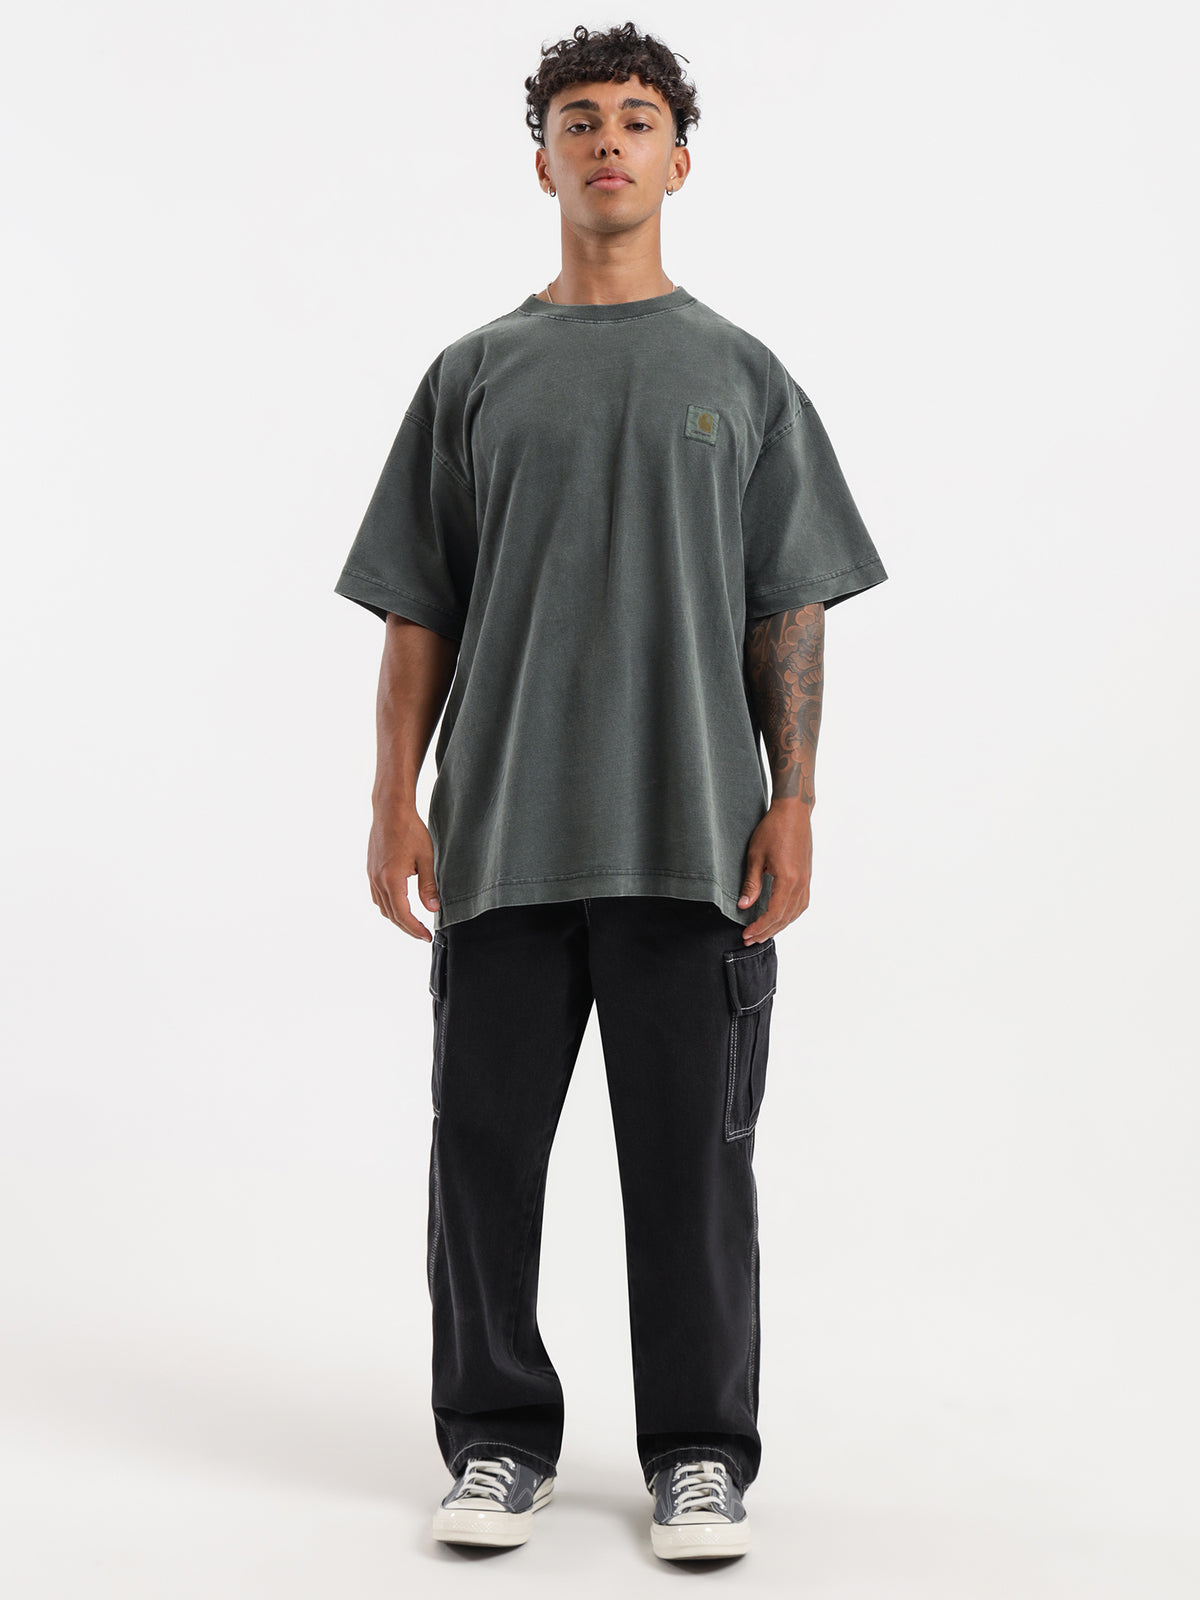 Short Sleeve Vista T-Shirt in Boxwood